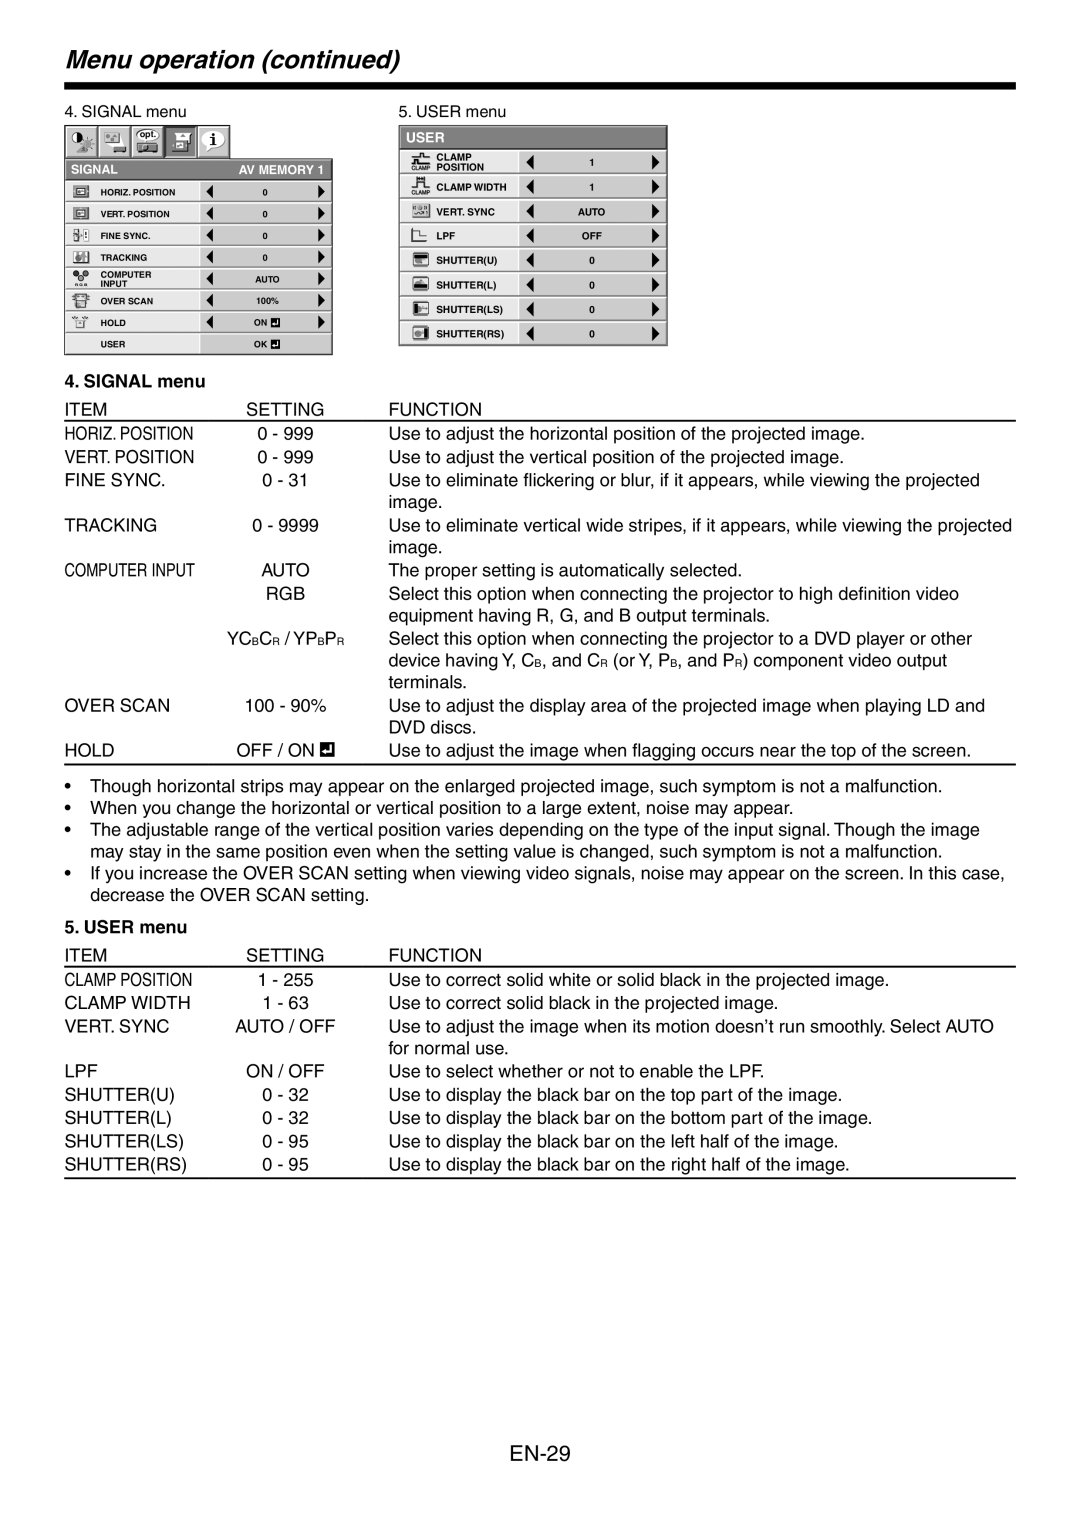 Mitsubishi Electronics HC3800 user manual Menu operation continued, EN-29, SIGNAL menu, USER menu 